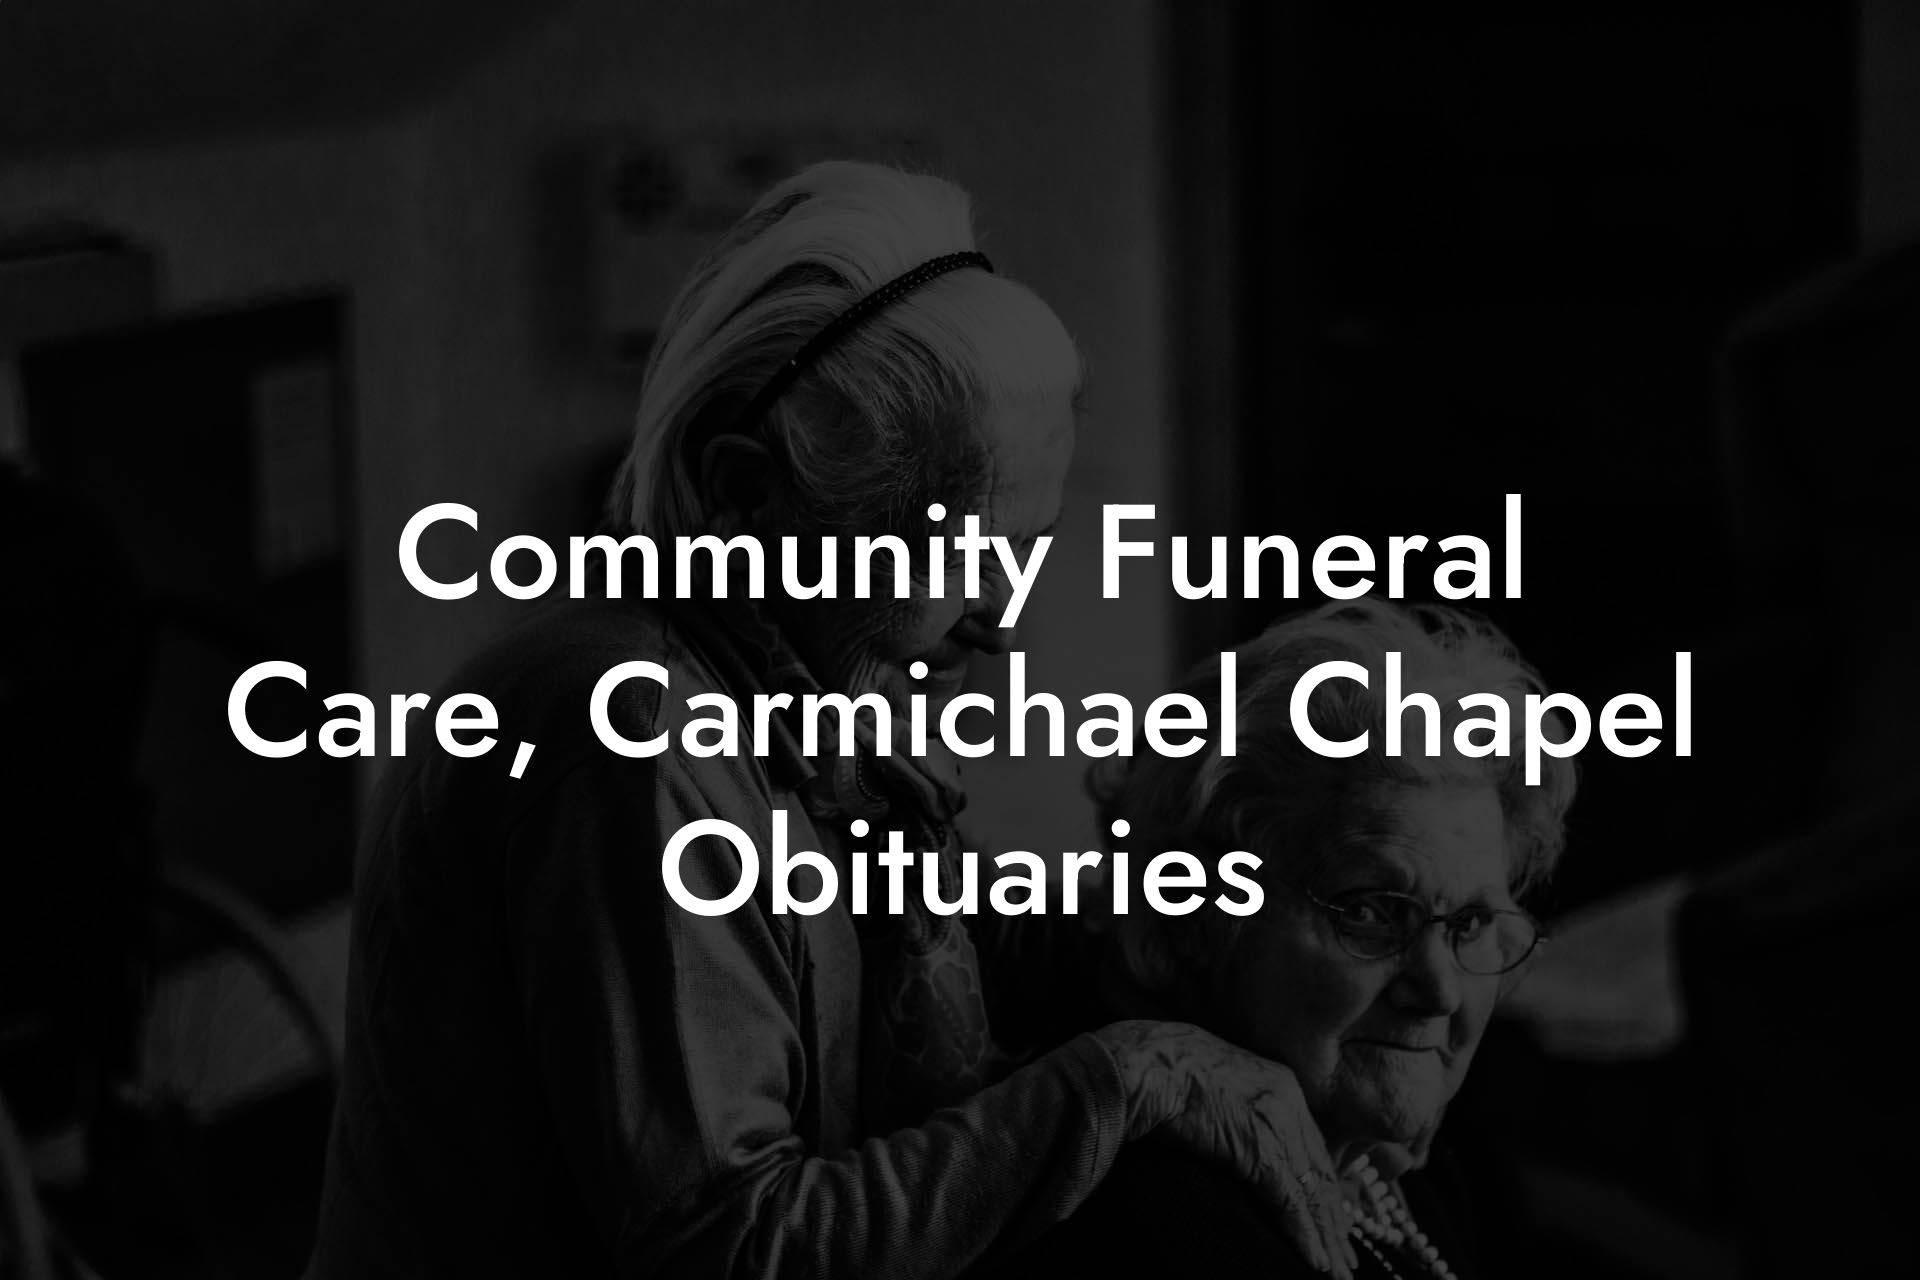 Community Funeral Care, Carmichael Chapel Obituaries